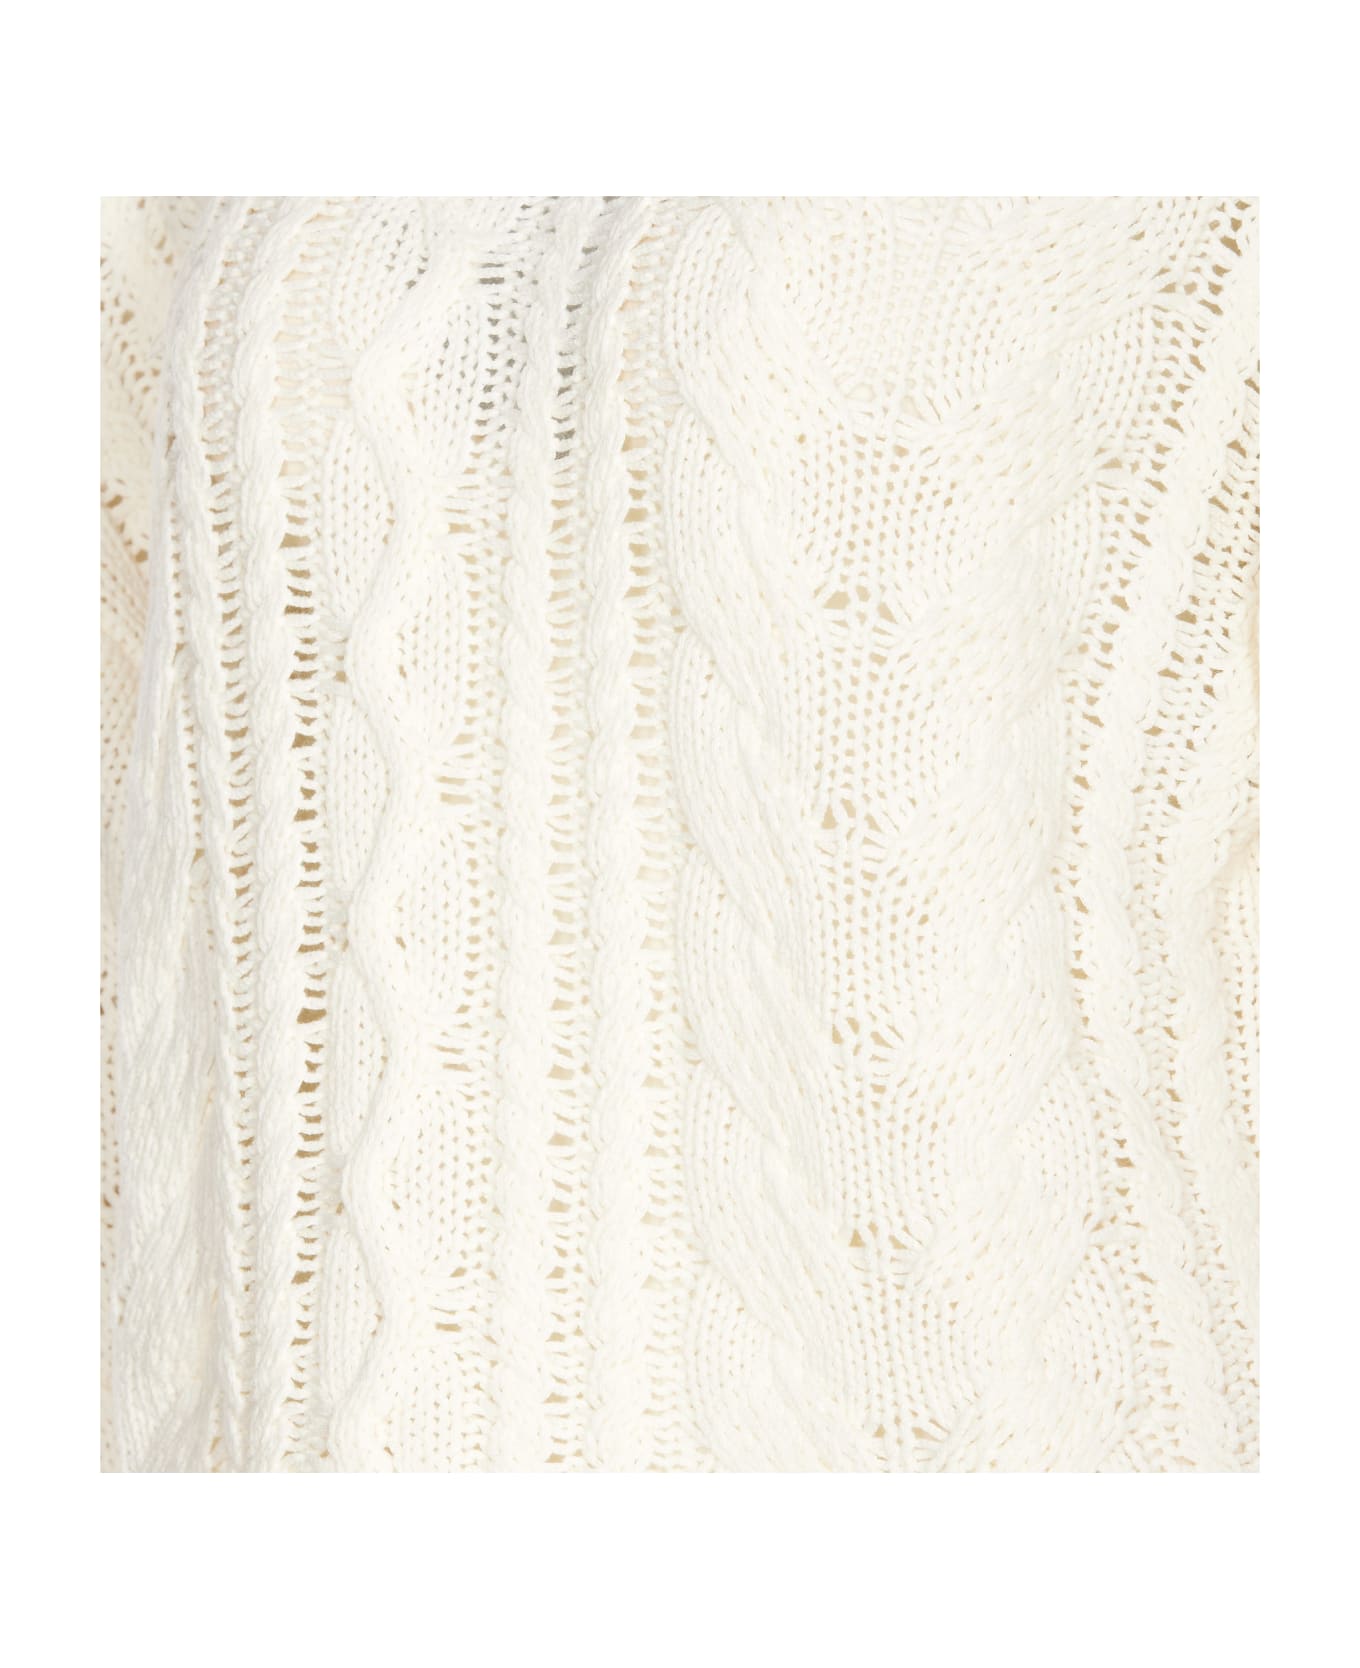 TwinSet Sweater - White